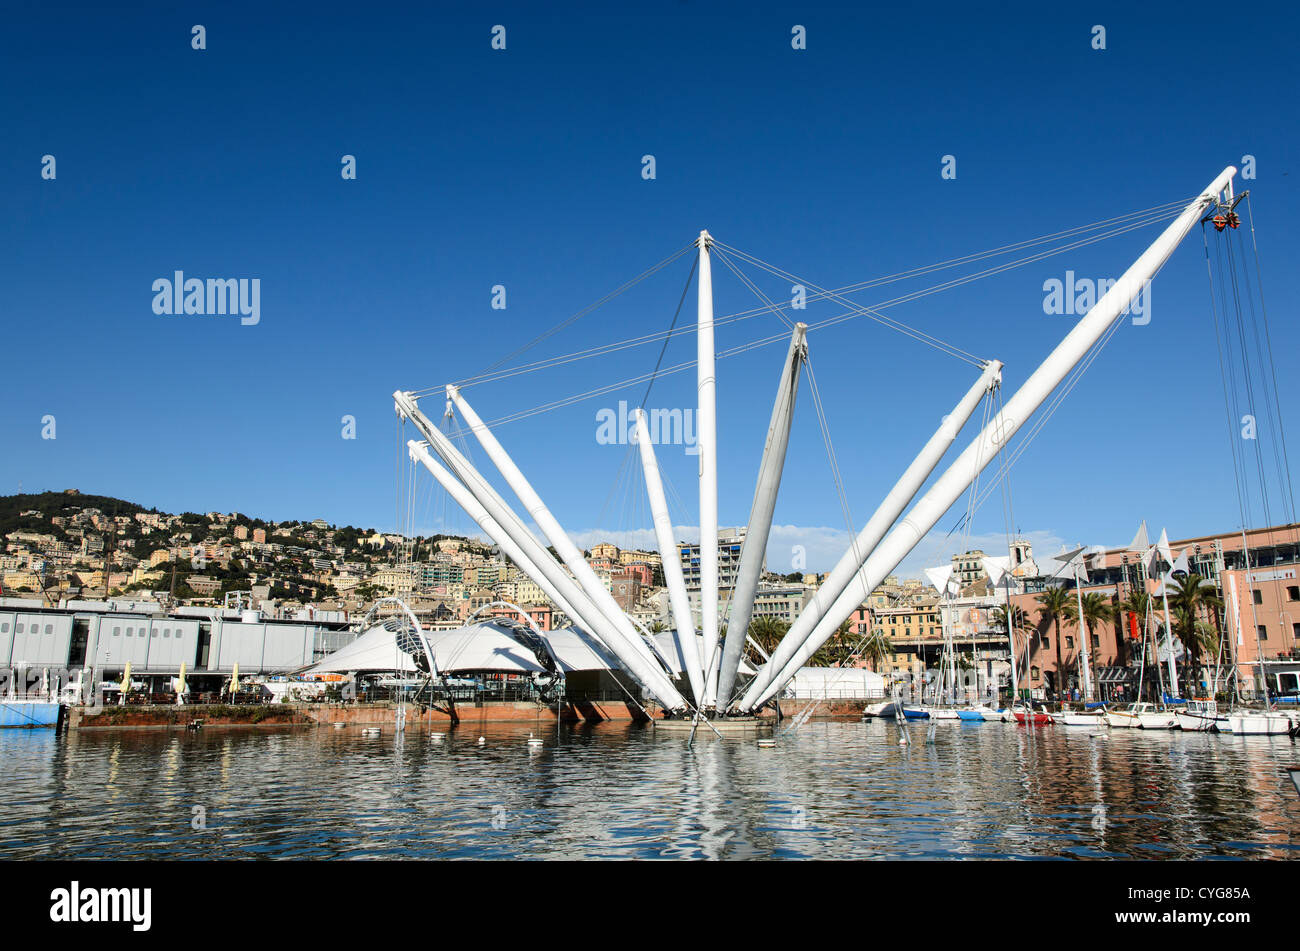 The Bigo tower created by the architect Renzo Piano in the Old Harbour (Porto  antico) - Genoa, Italy Stock Photo - Alamy